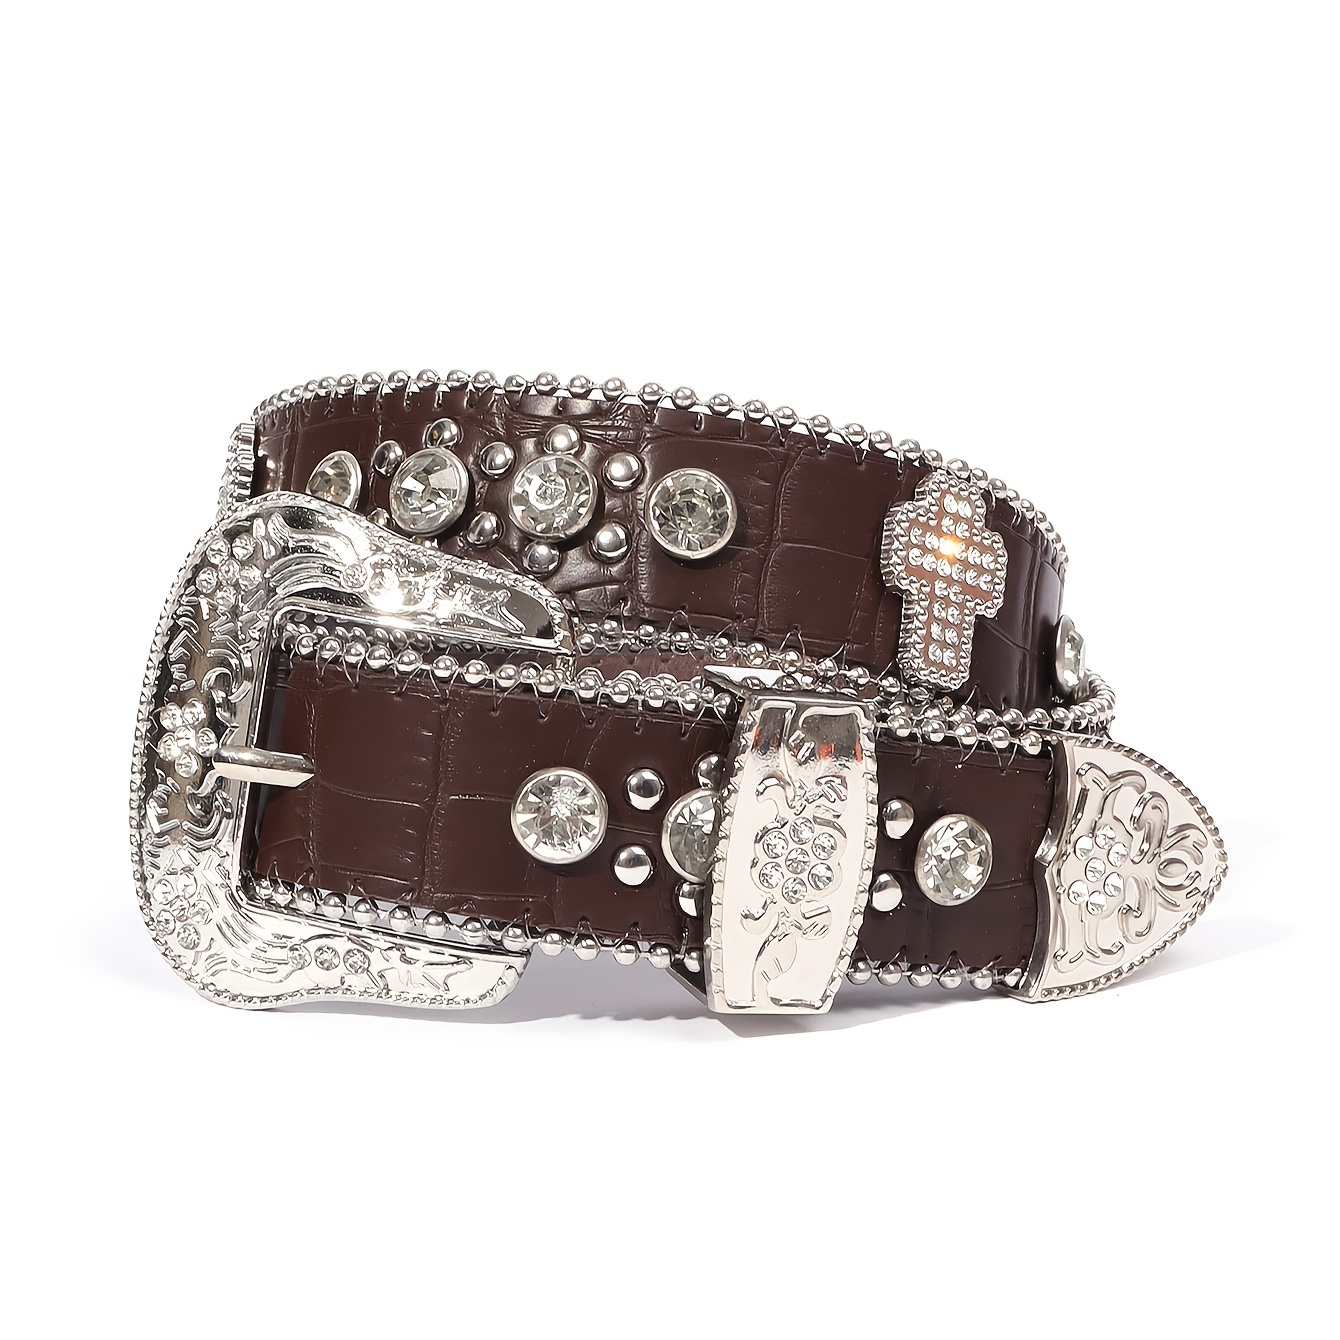 Ladies Belt Diamond Western Belt Shiny Designer Leather Crocodile Embossed  Belts